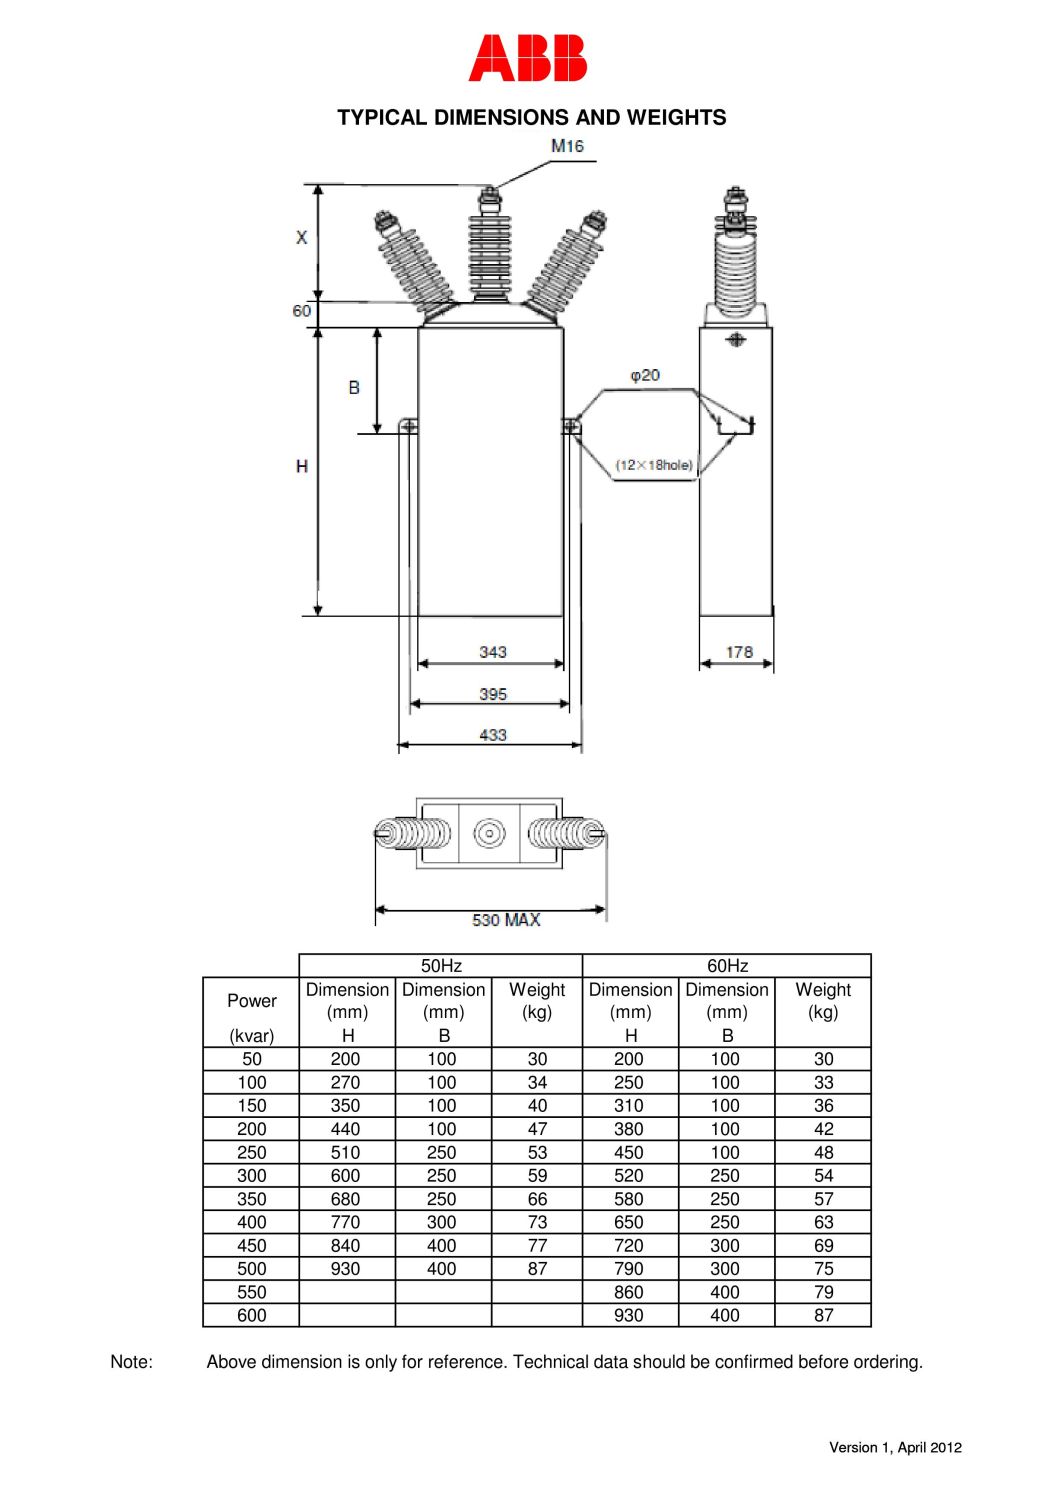 500kvar ABB Brand Medium Voltage Shunt Three Phase Capacitor with Inner Fuse